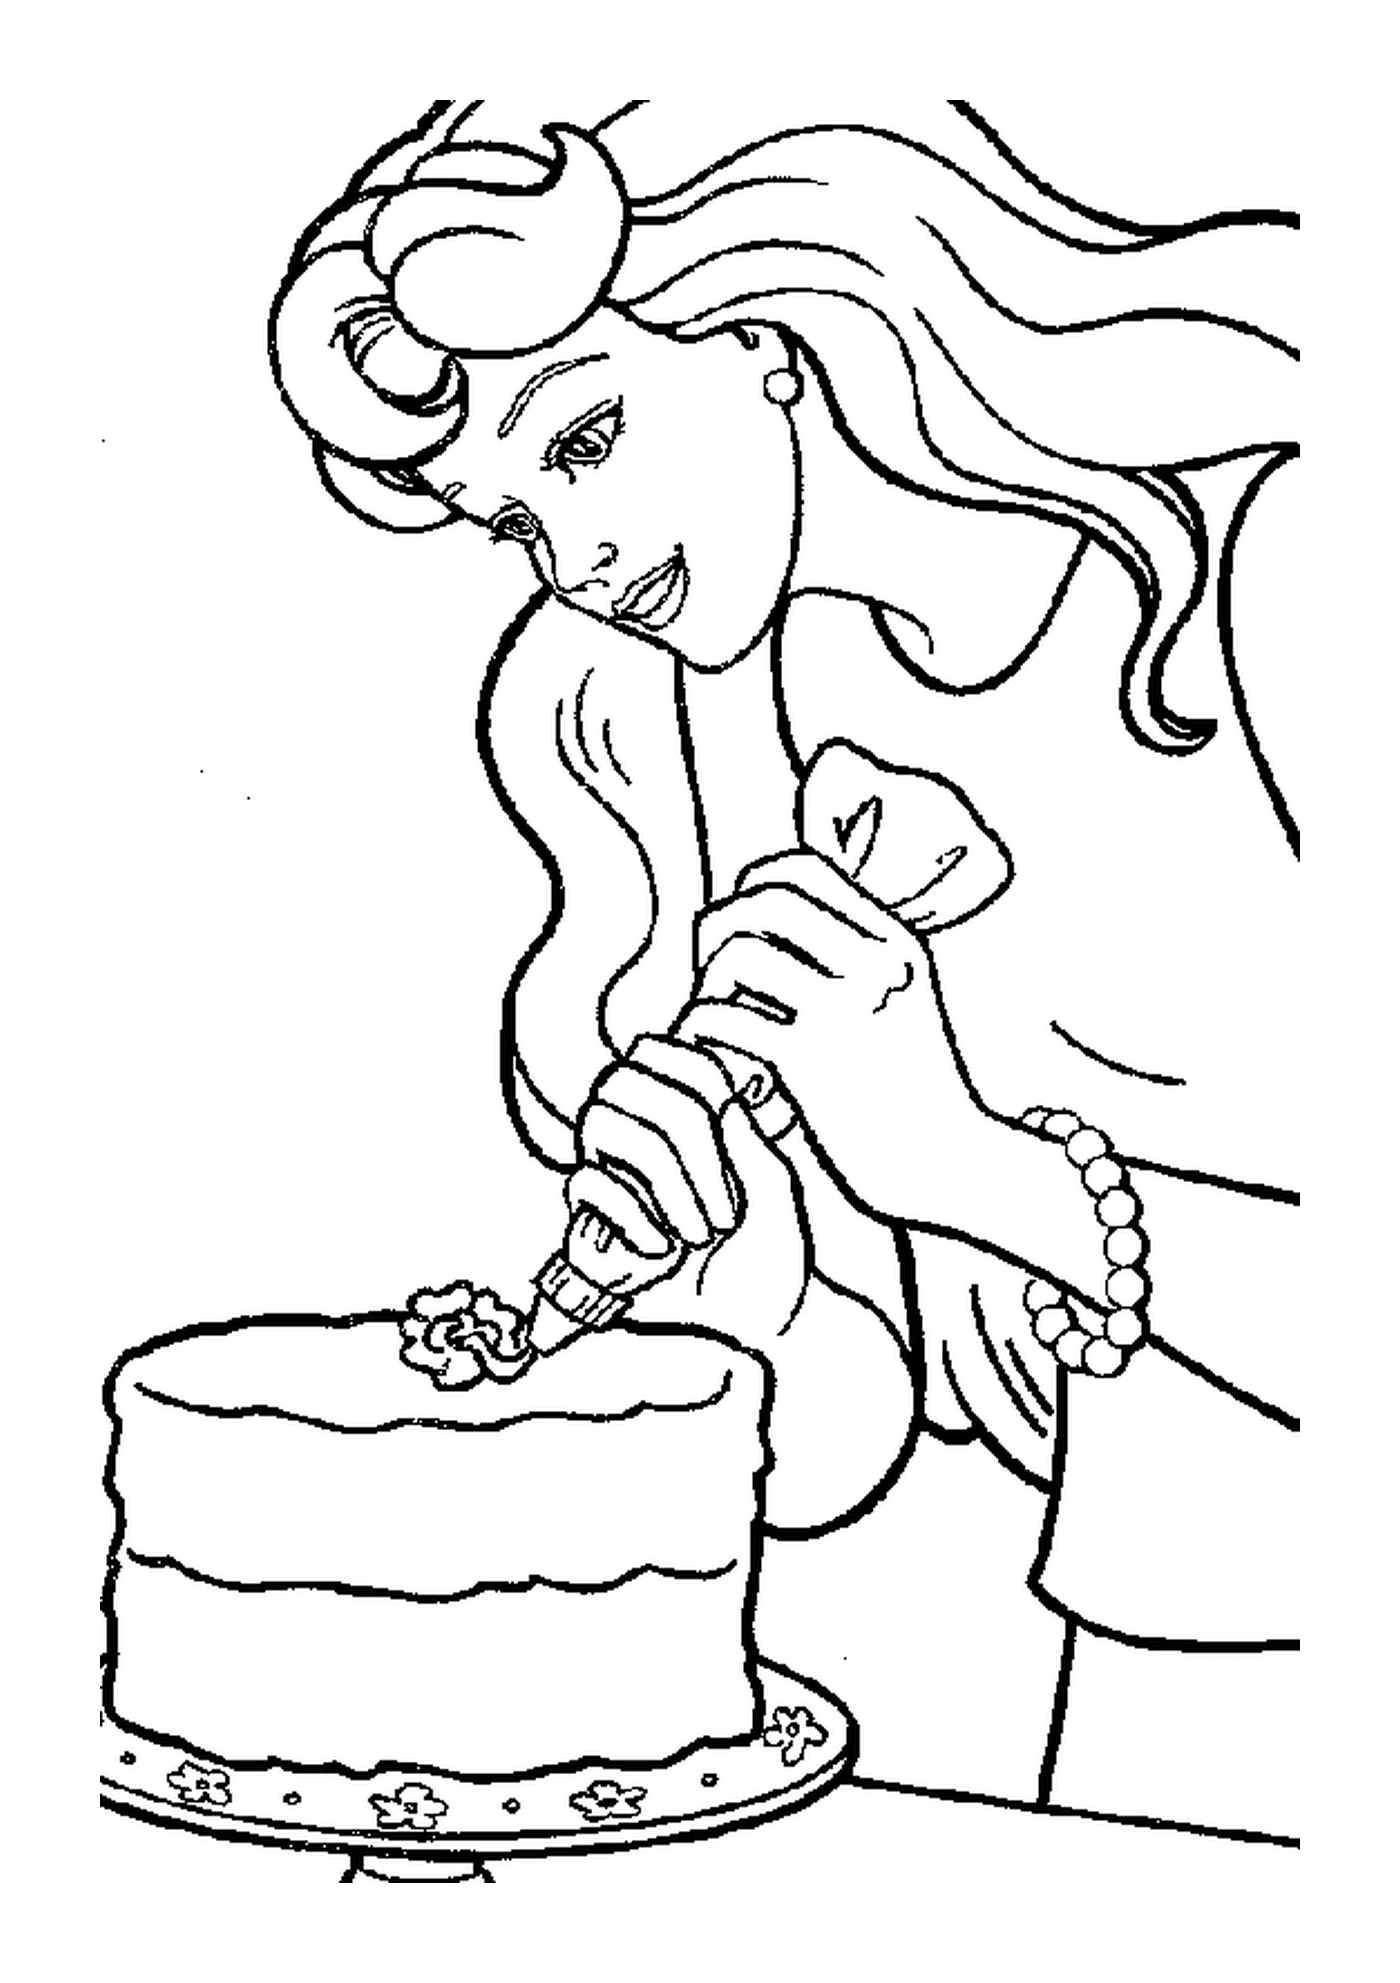  Barbie cutting a cake with a knife 